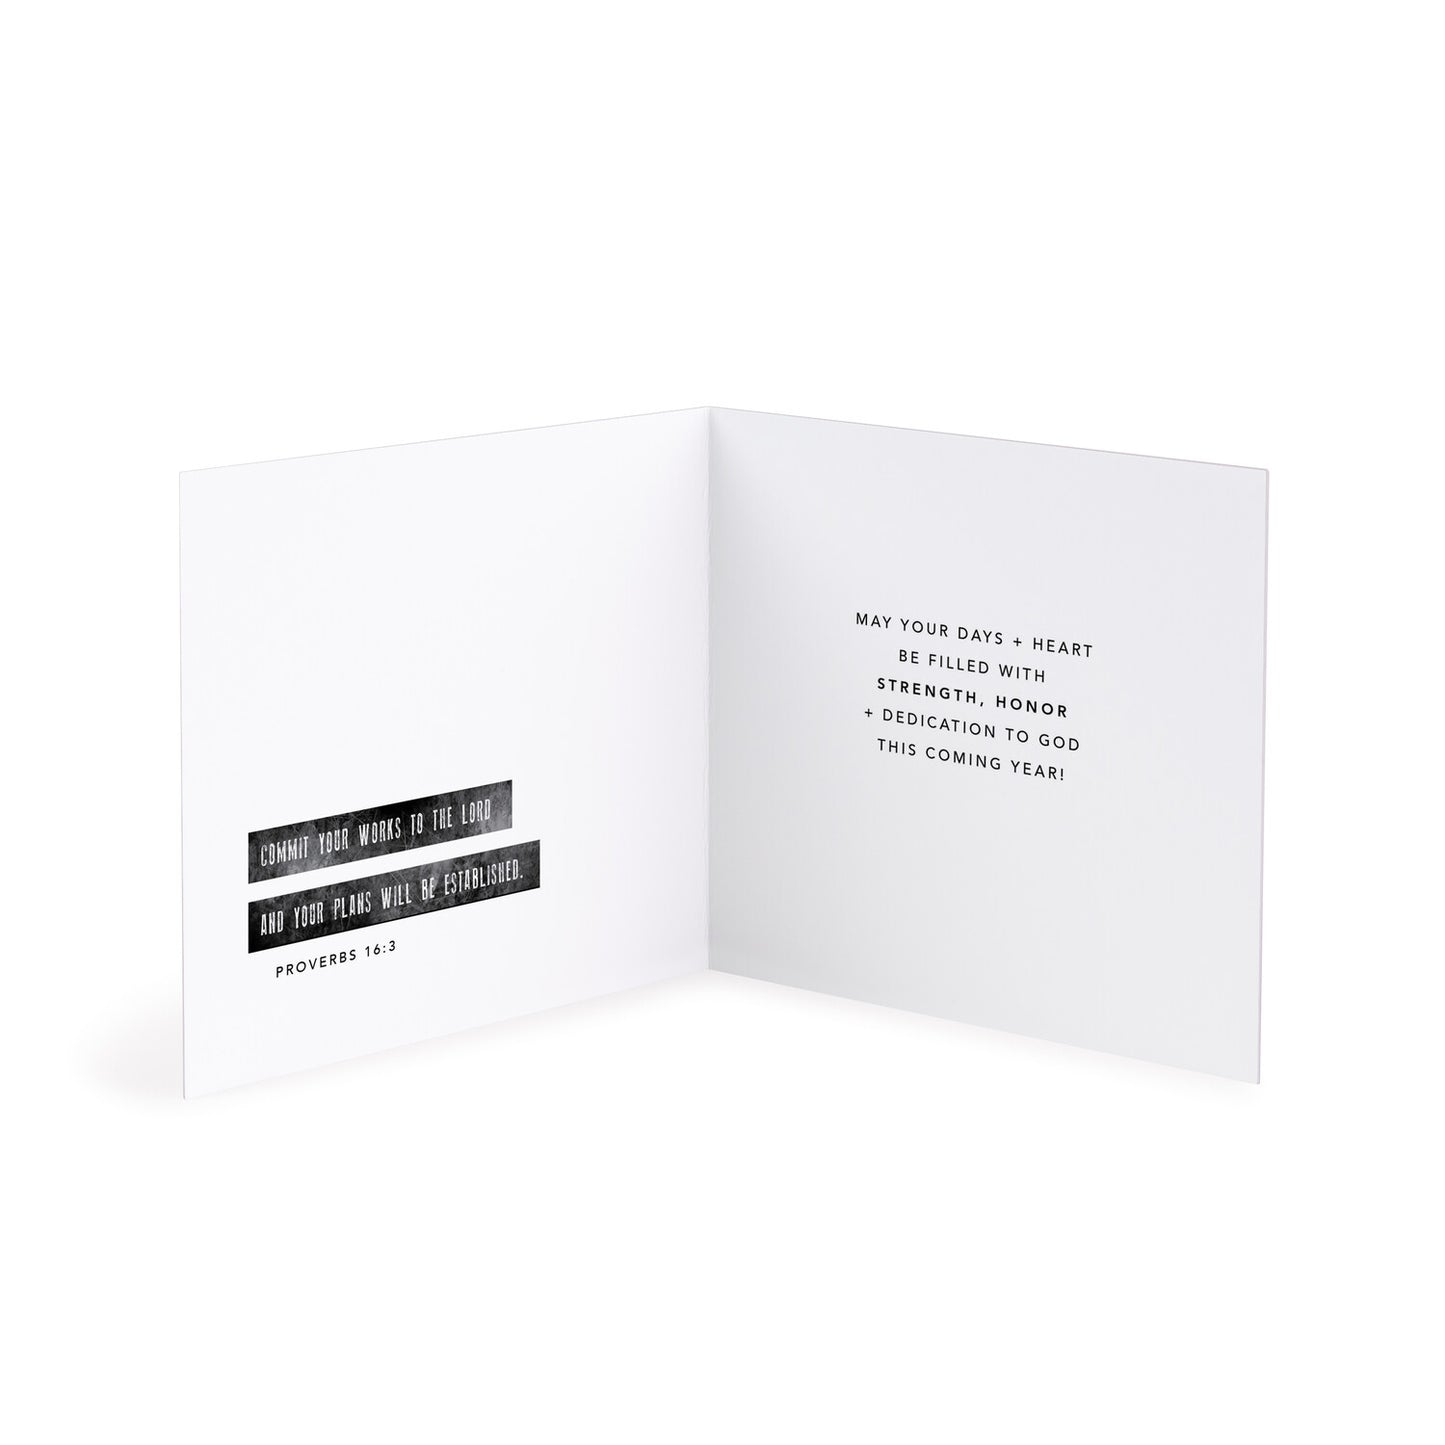 Brother Birthday Greeting Card - Heartfelt Gift Box